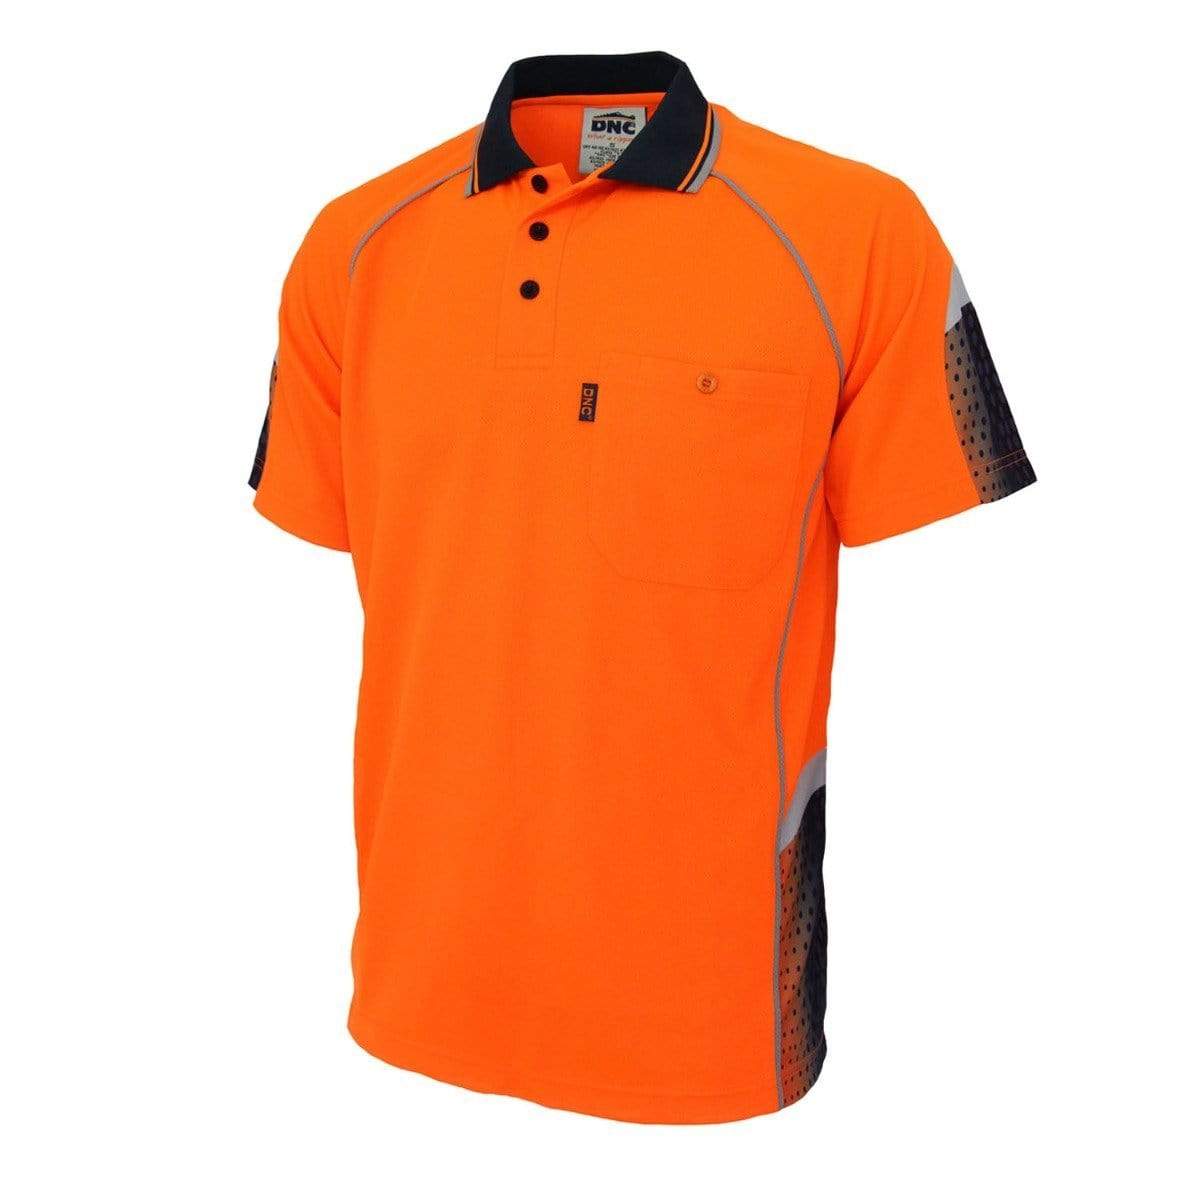 Dnc Workwear Hi-vis Galaxy Sublimated Polo - 3564 Work Wear DNC Workwear Orange/Navy XS 